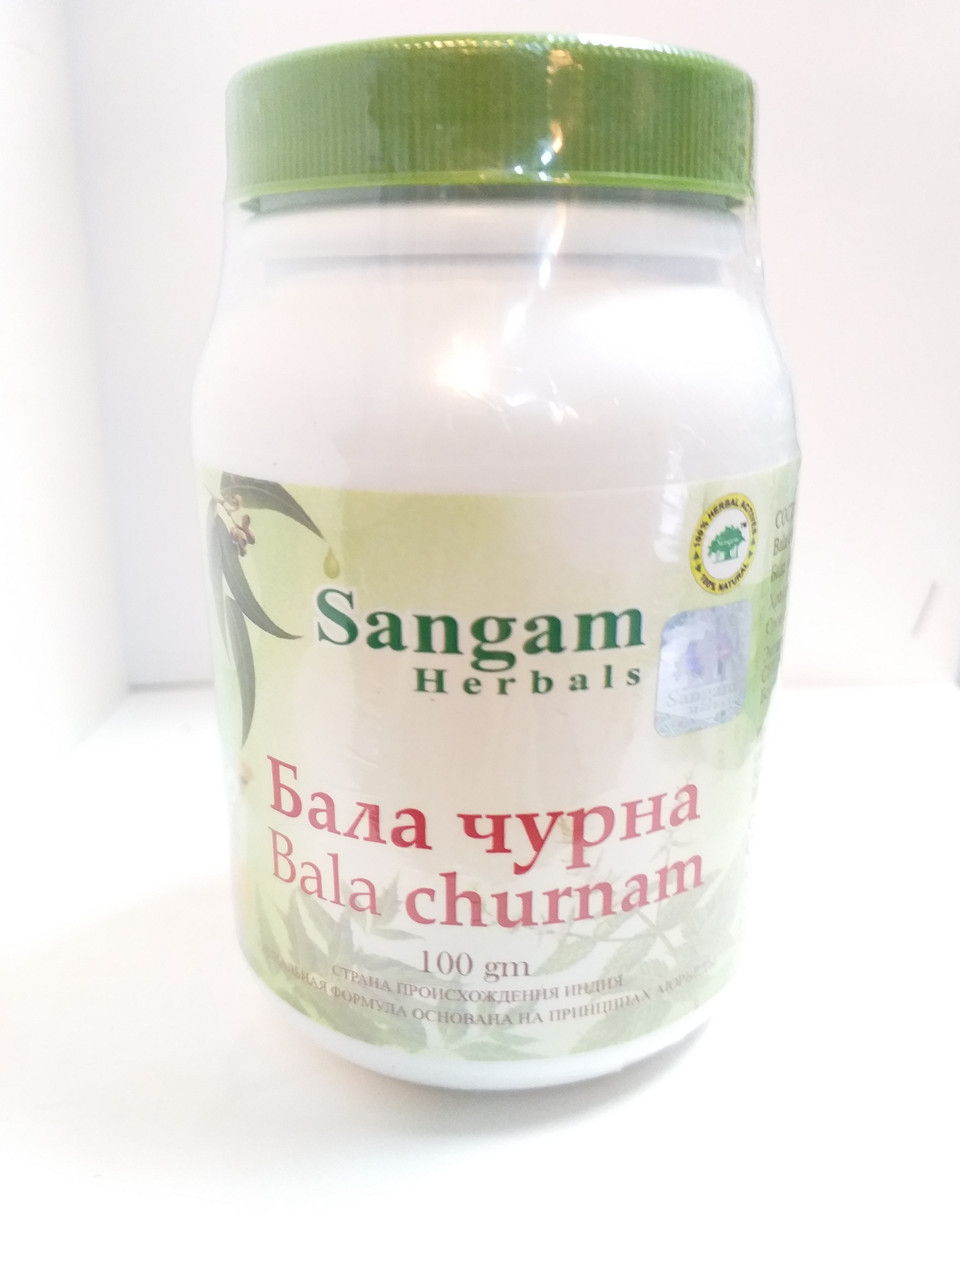 Бала чурна, Bala churnam,100 гр, Сангам, Sangam Herbals